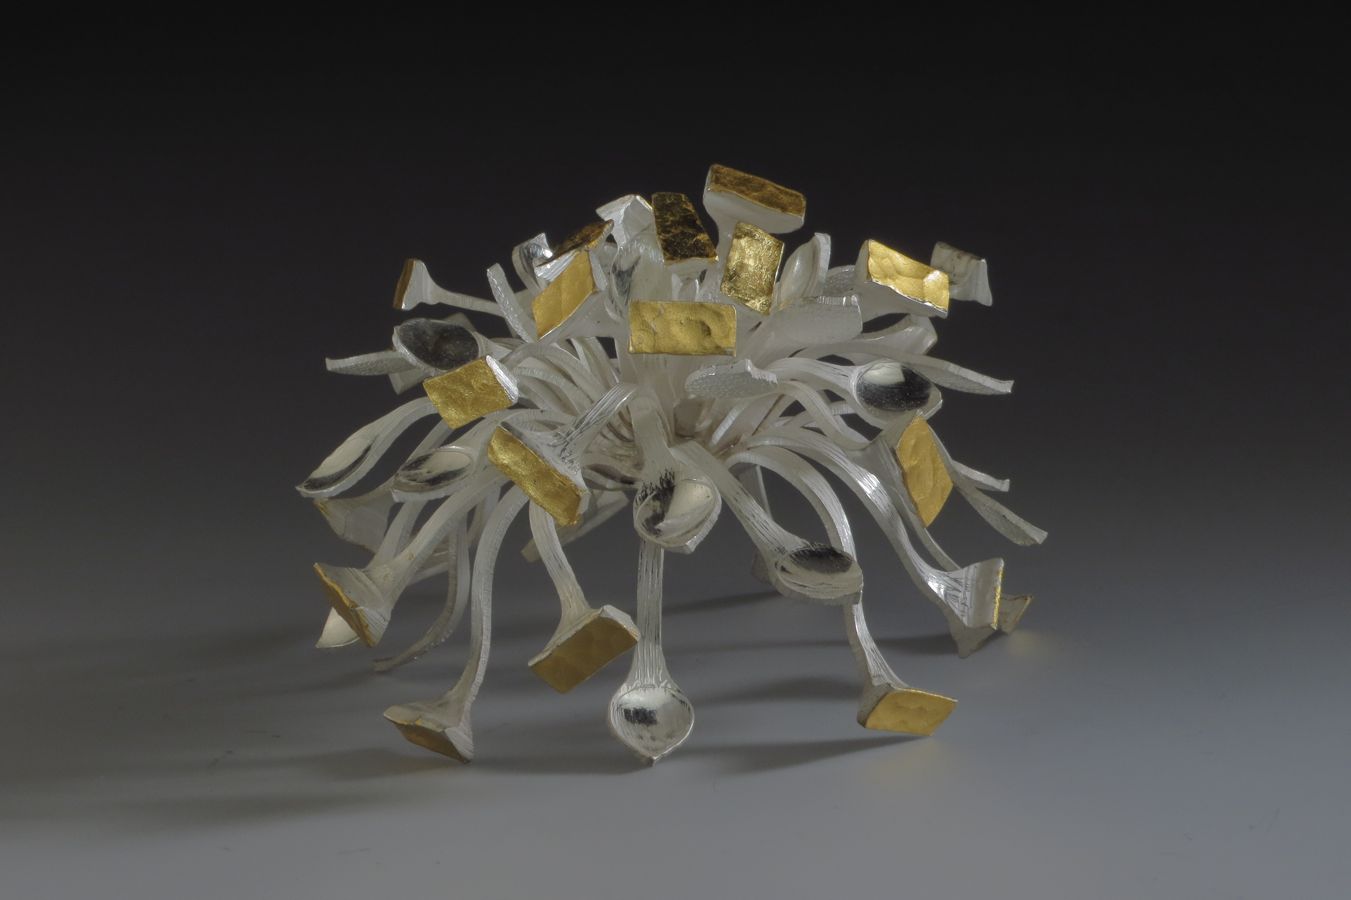 Piece -- materials: silver, gold leaf; dimensions: diameter 14 x h 9 cm;